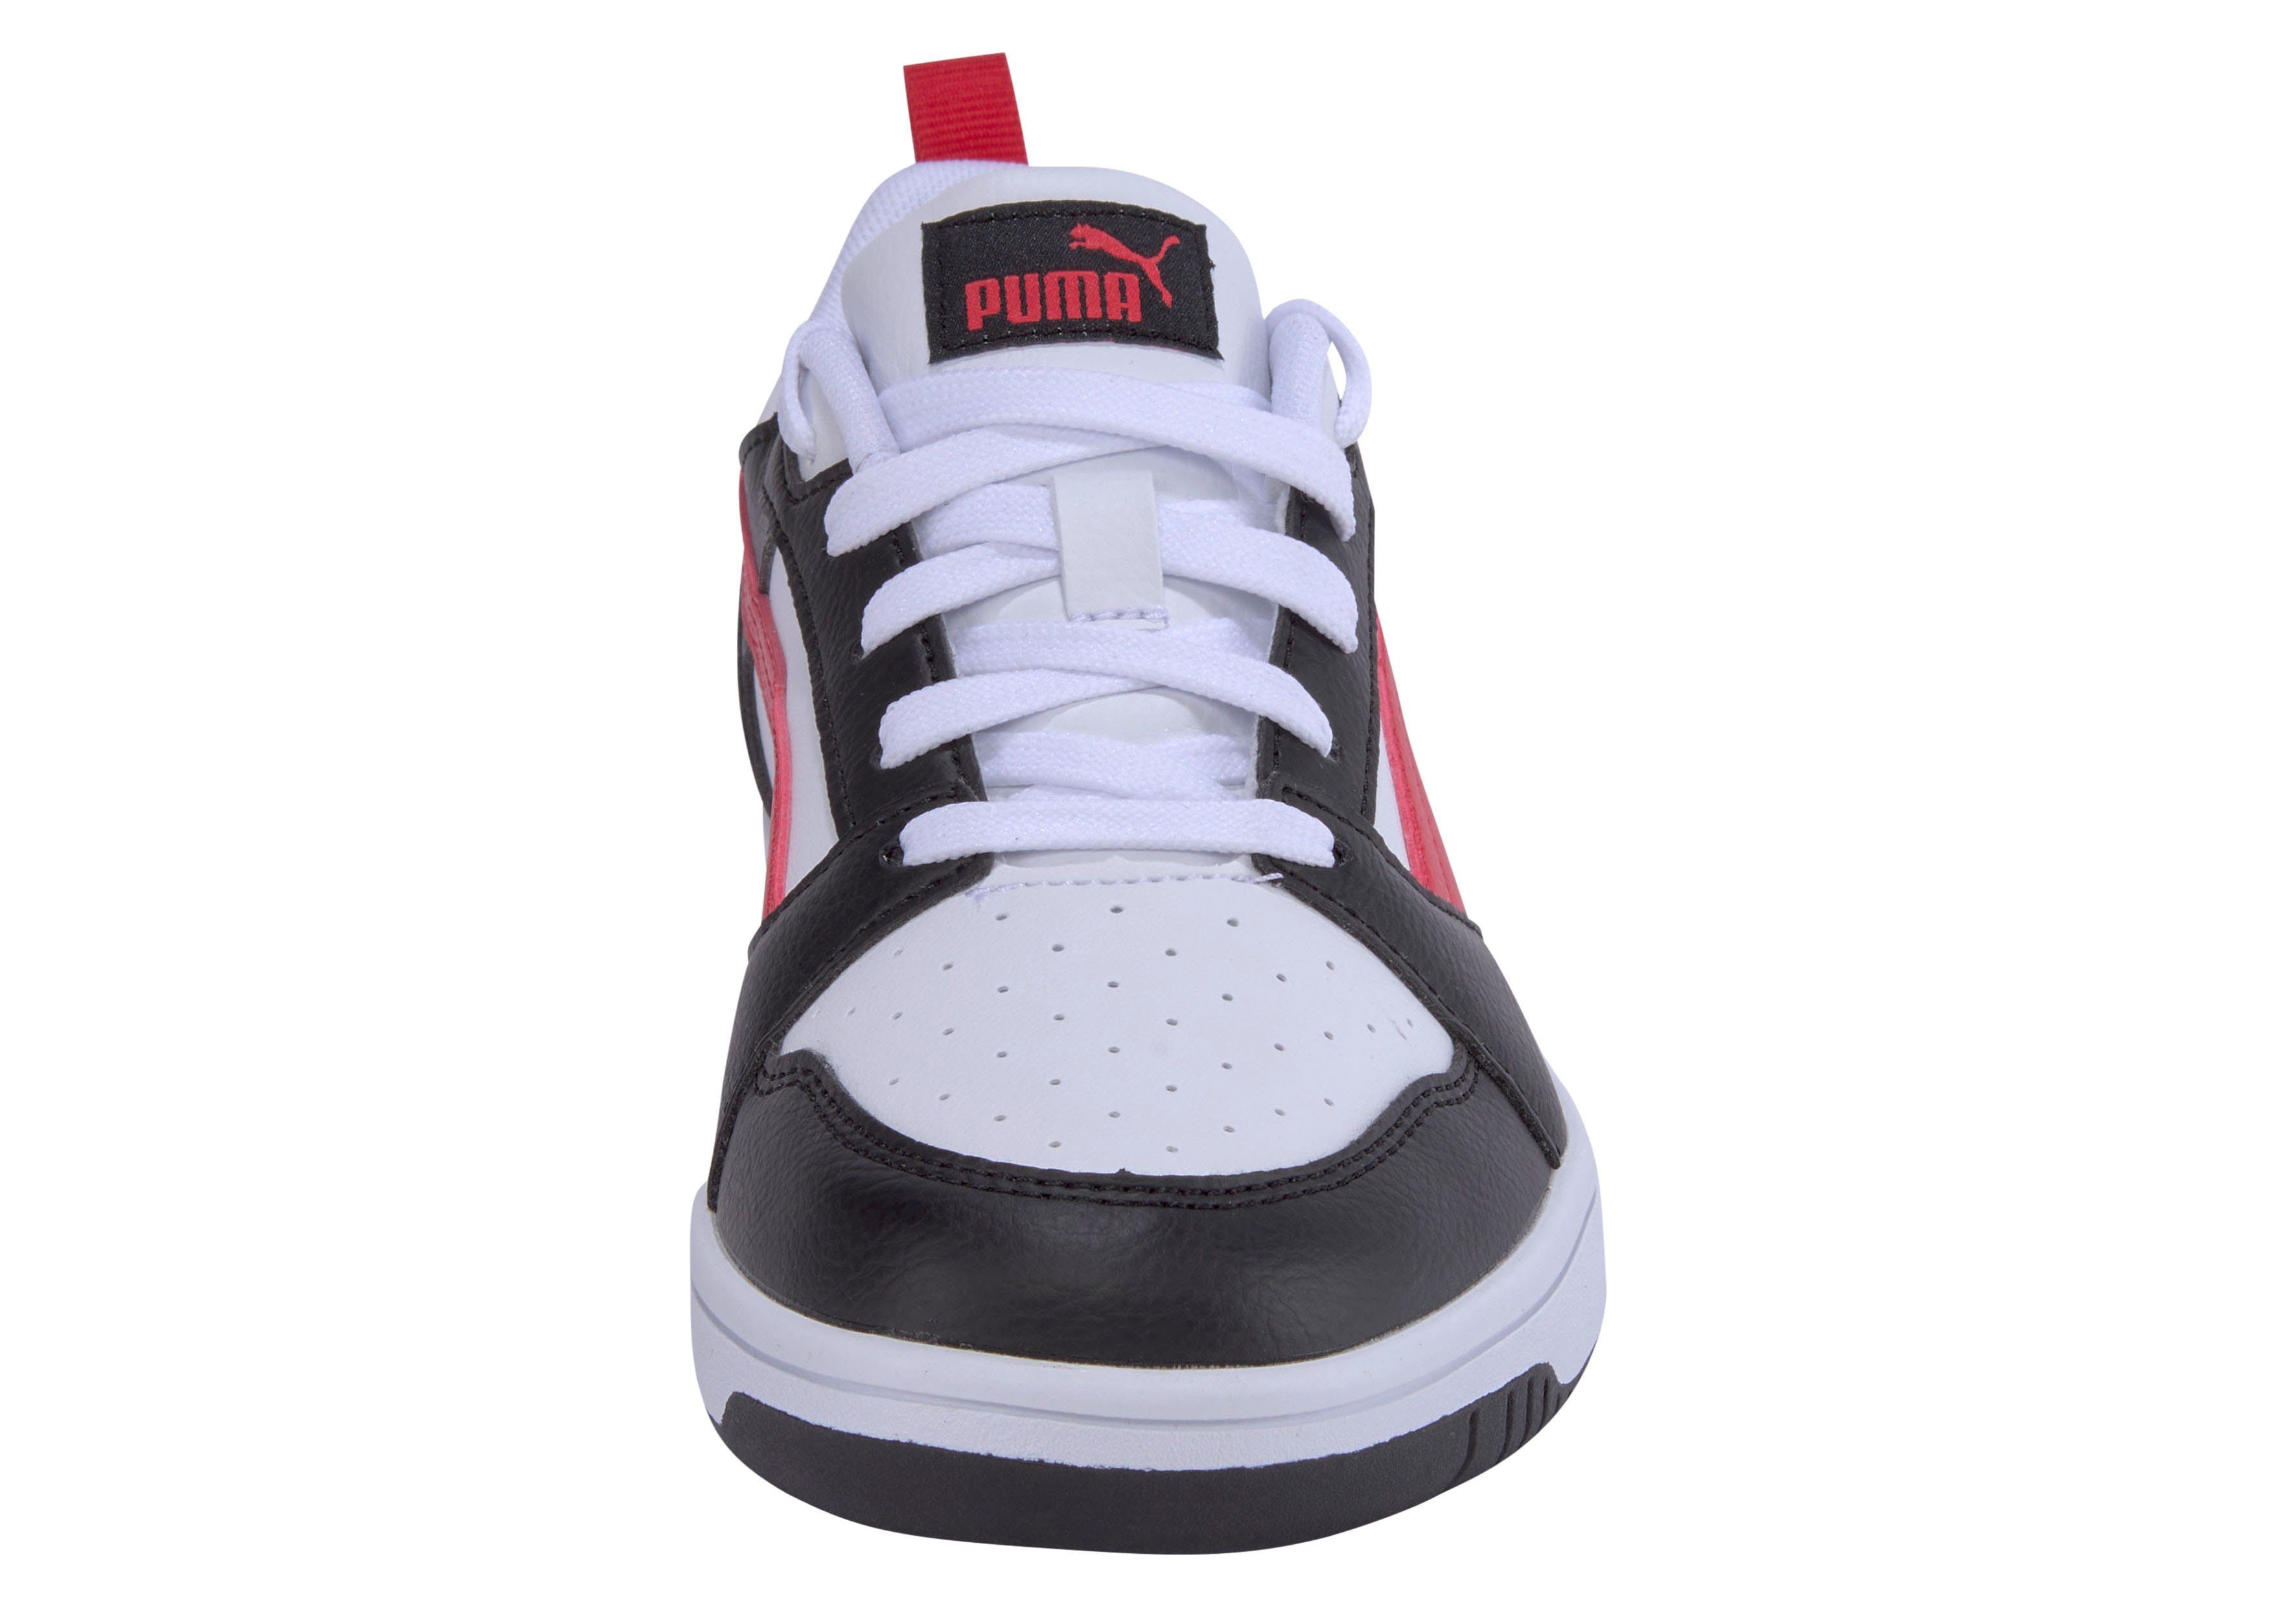 PUMA REBOUND V6 Red-PUMA PS White-For Time PUMA All Black Sneaker LO